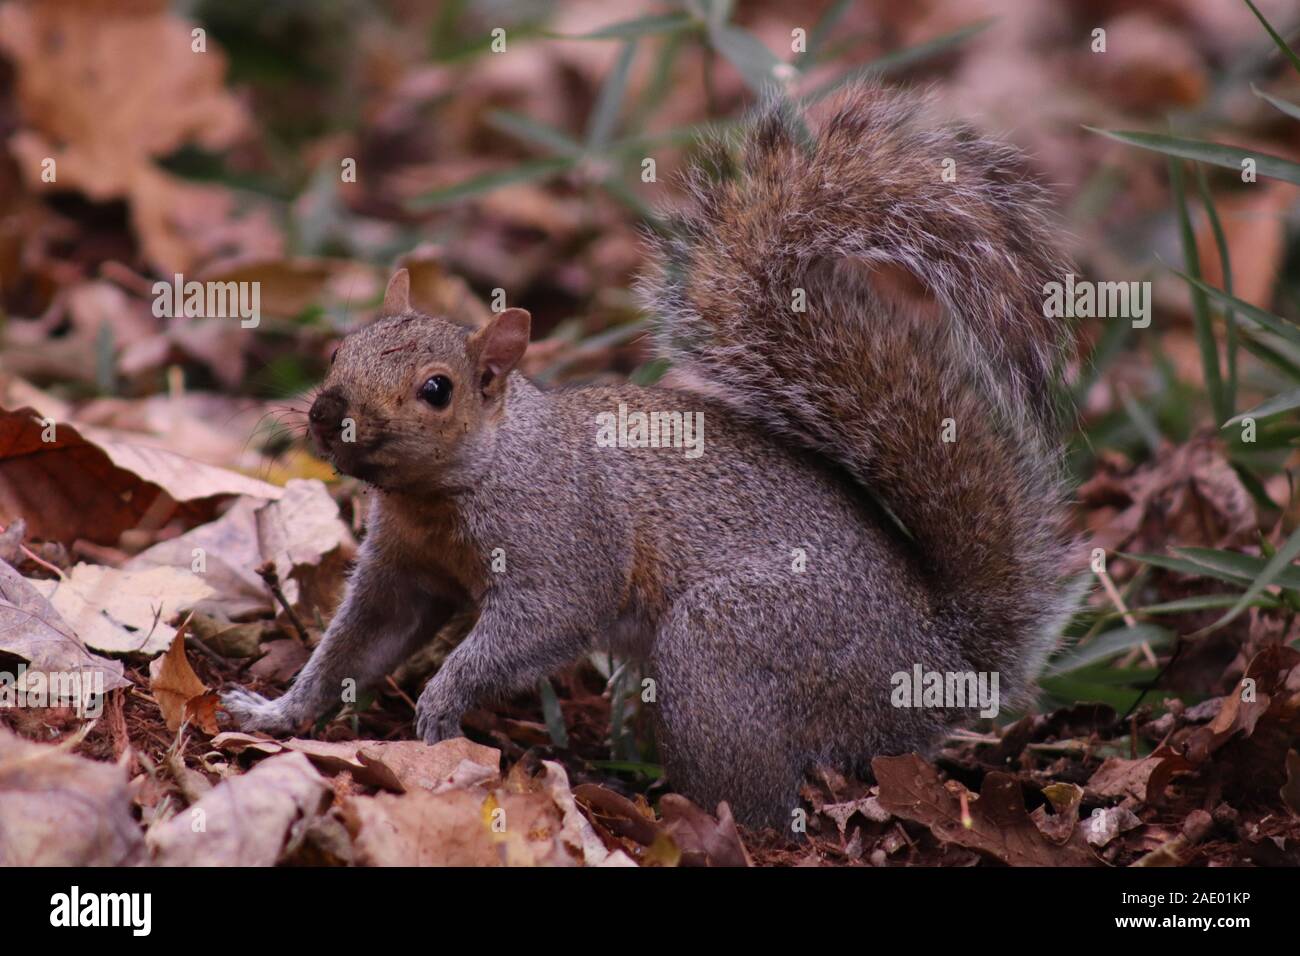 A Squirrel in North Carolina Stock Photo